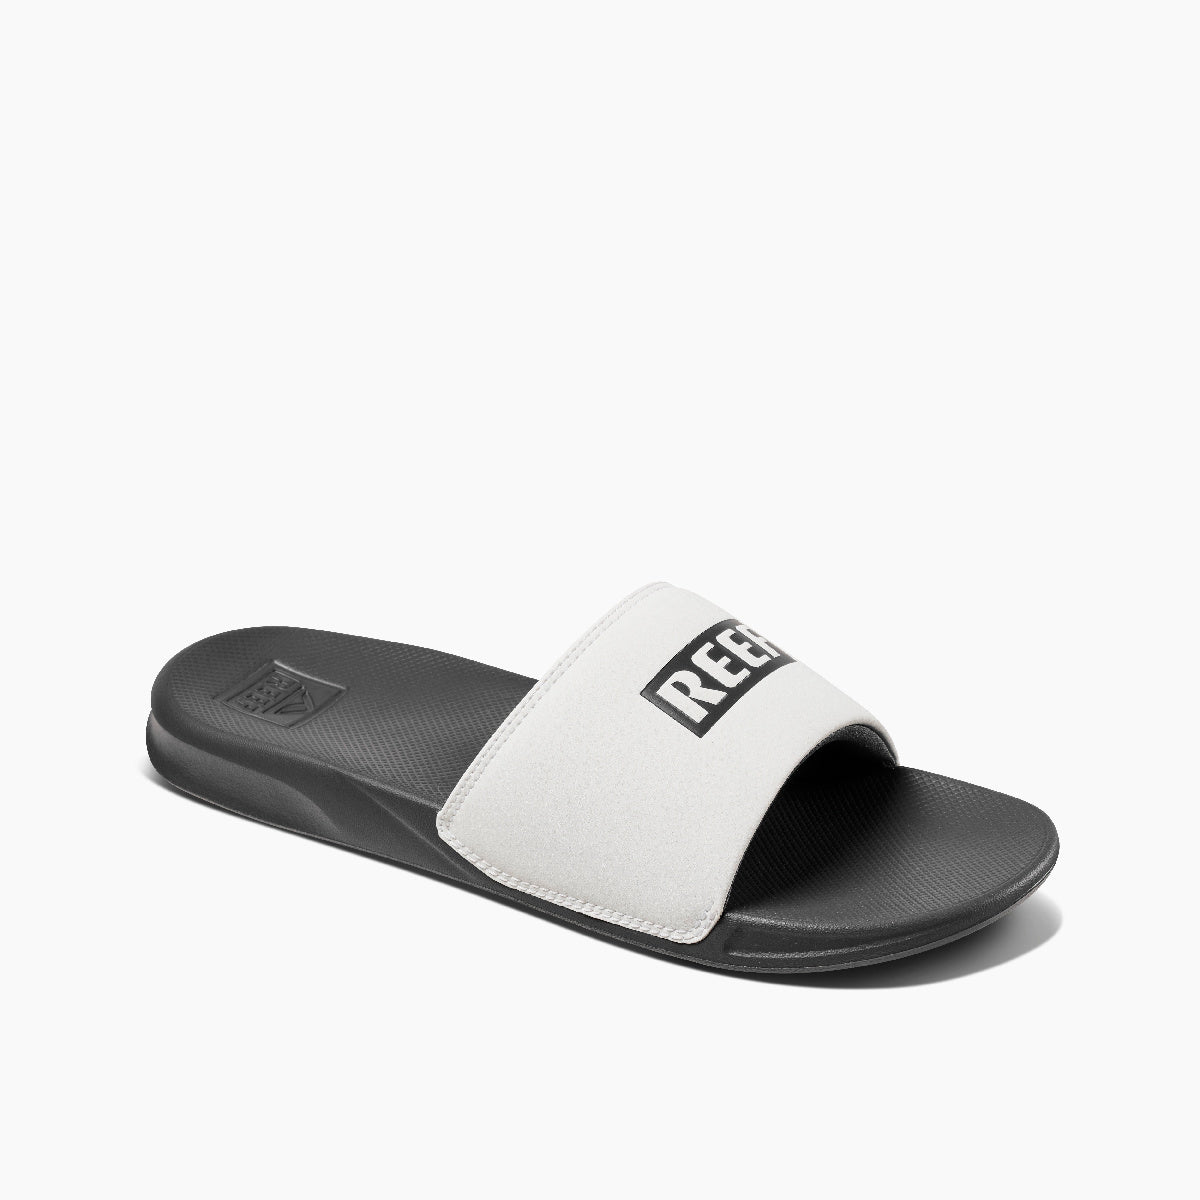 Reef Men's One Slide Sandals - White/Grey